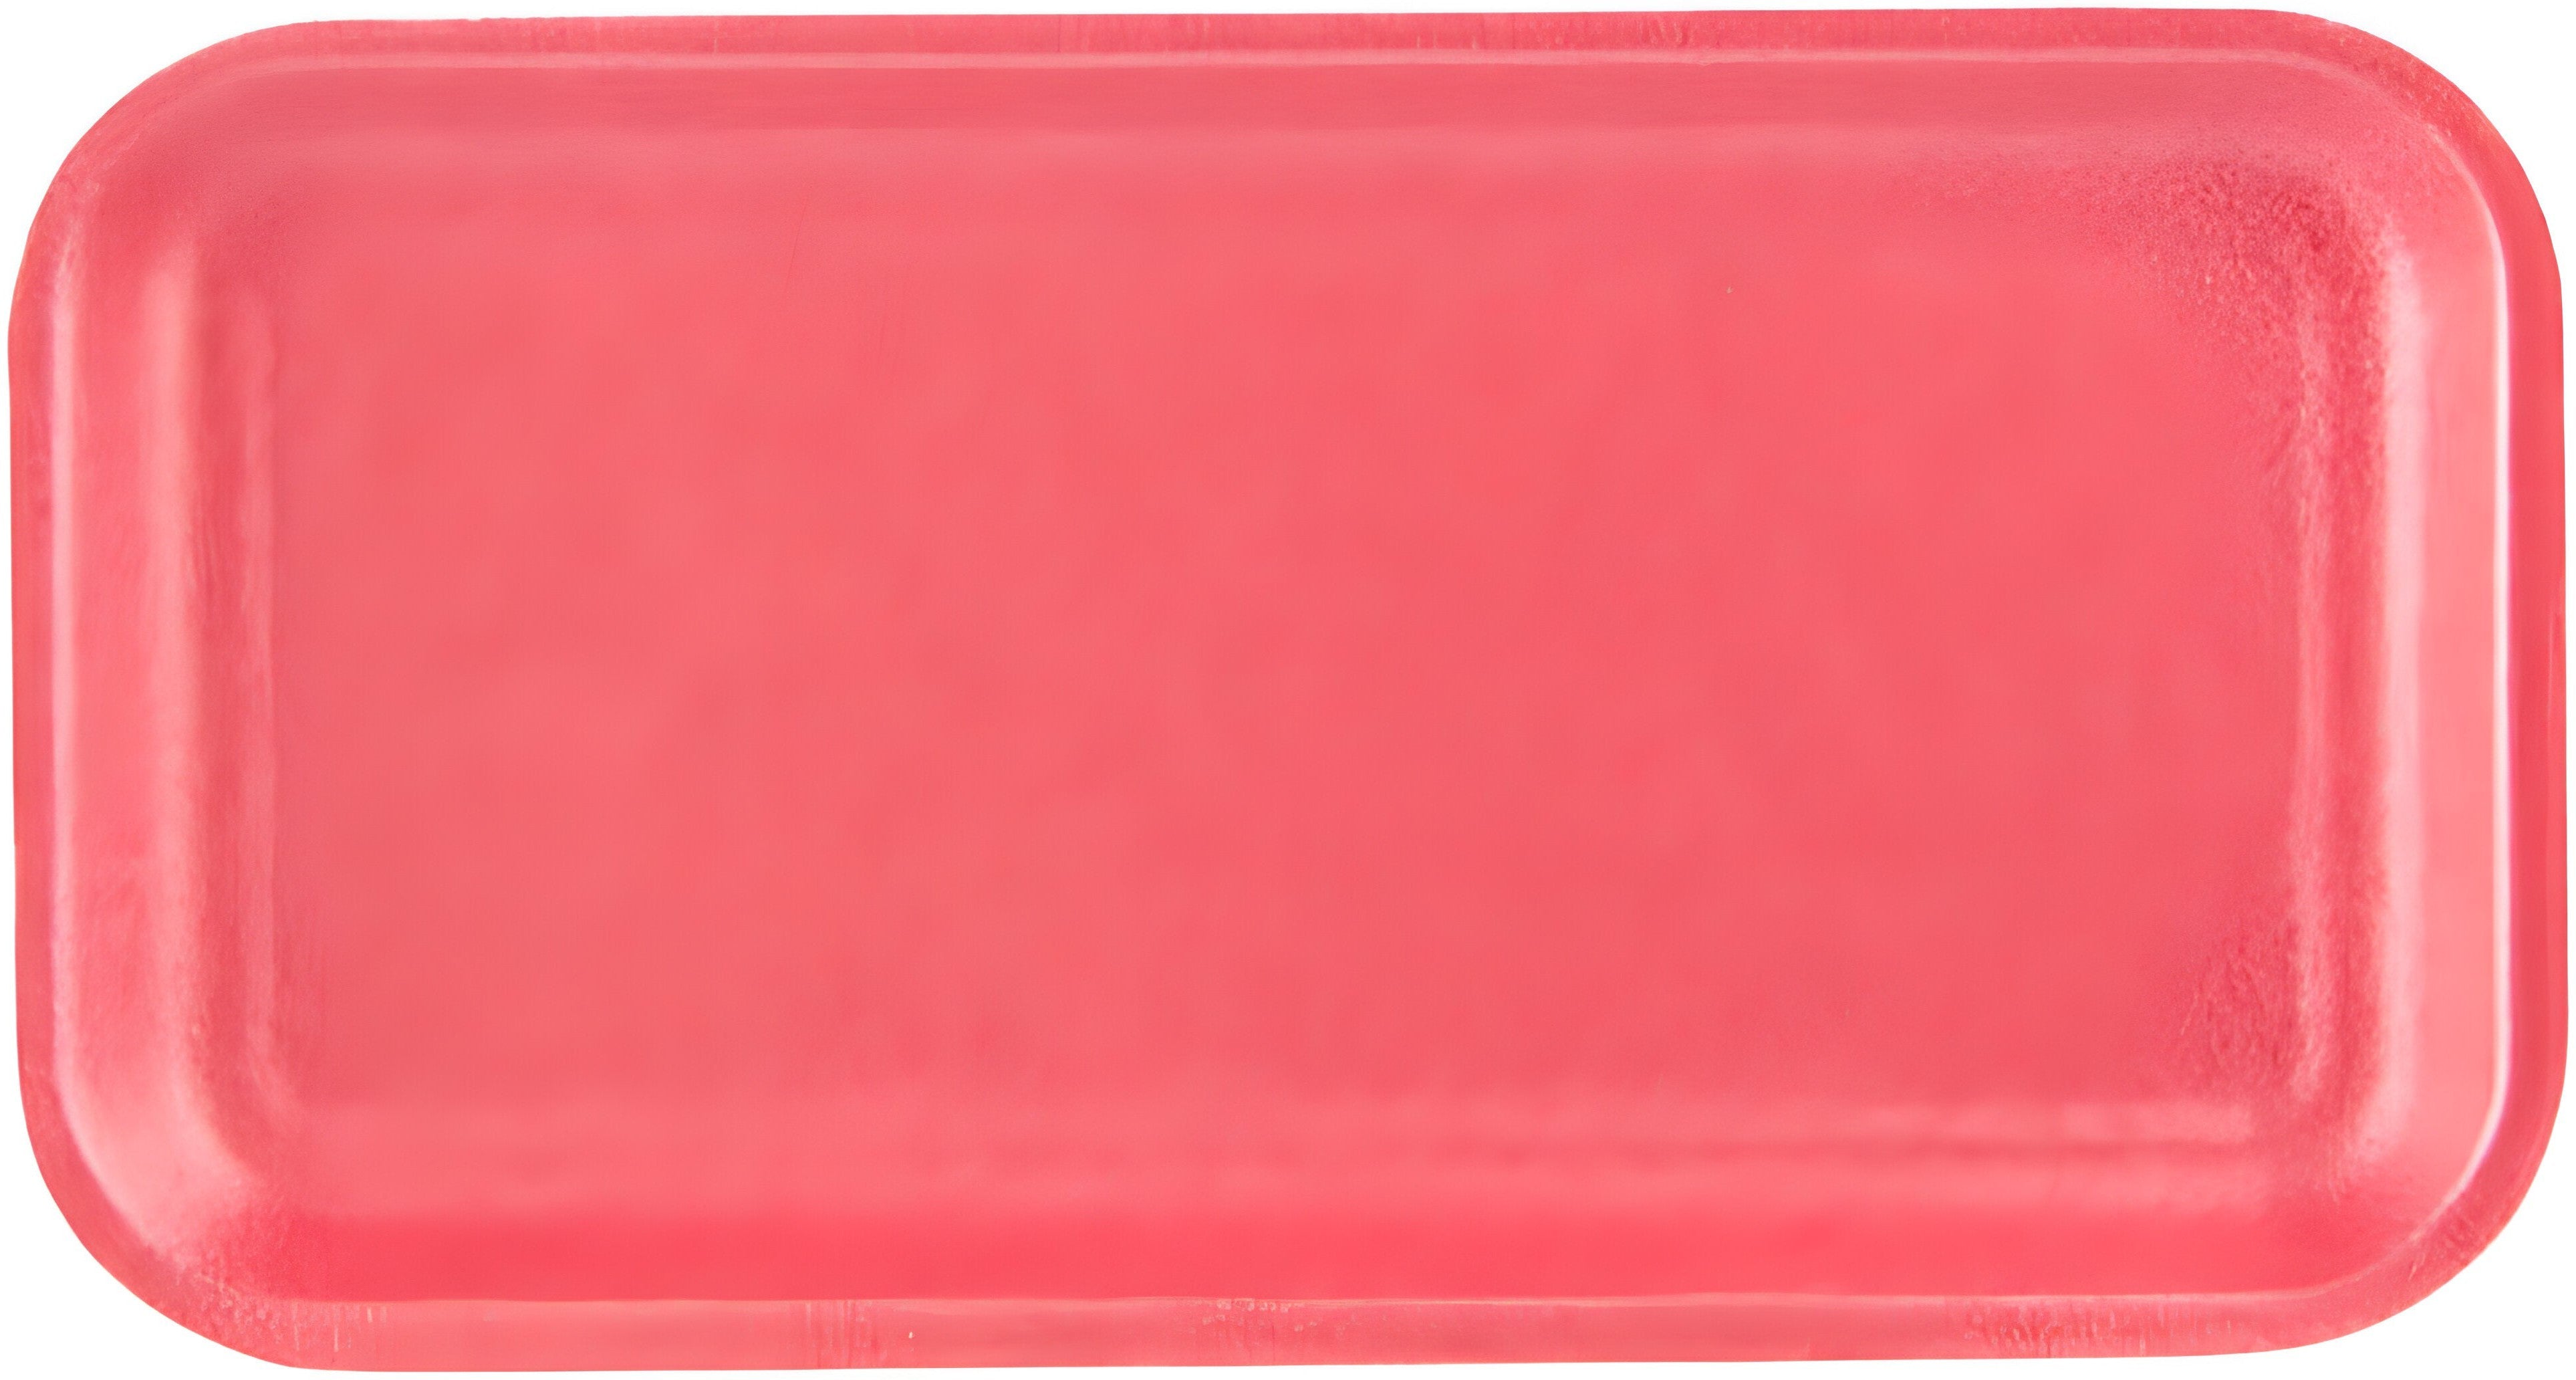 CKF Inc. - 5.8" x 10.7" x 0.6" Dark Rose Pink Foam 10S Tray, 500/cs - 88064